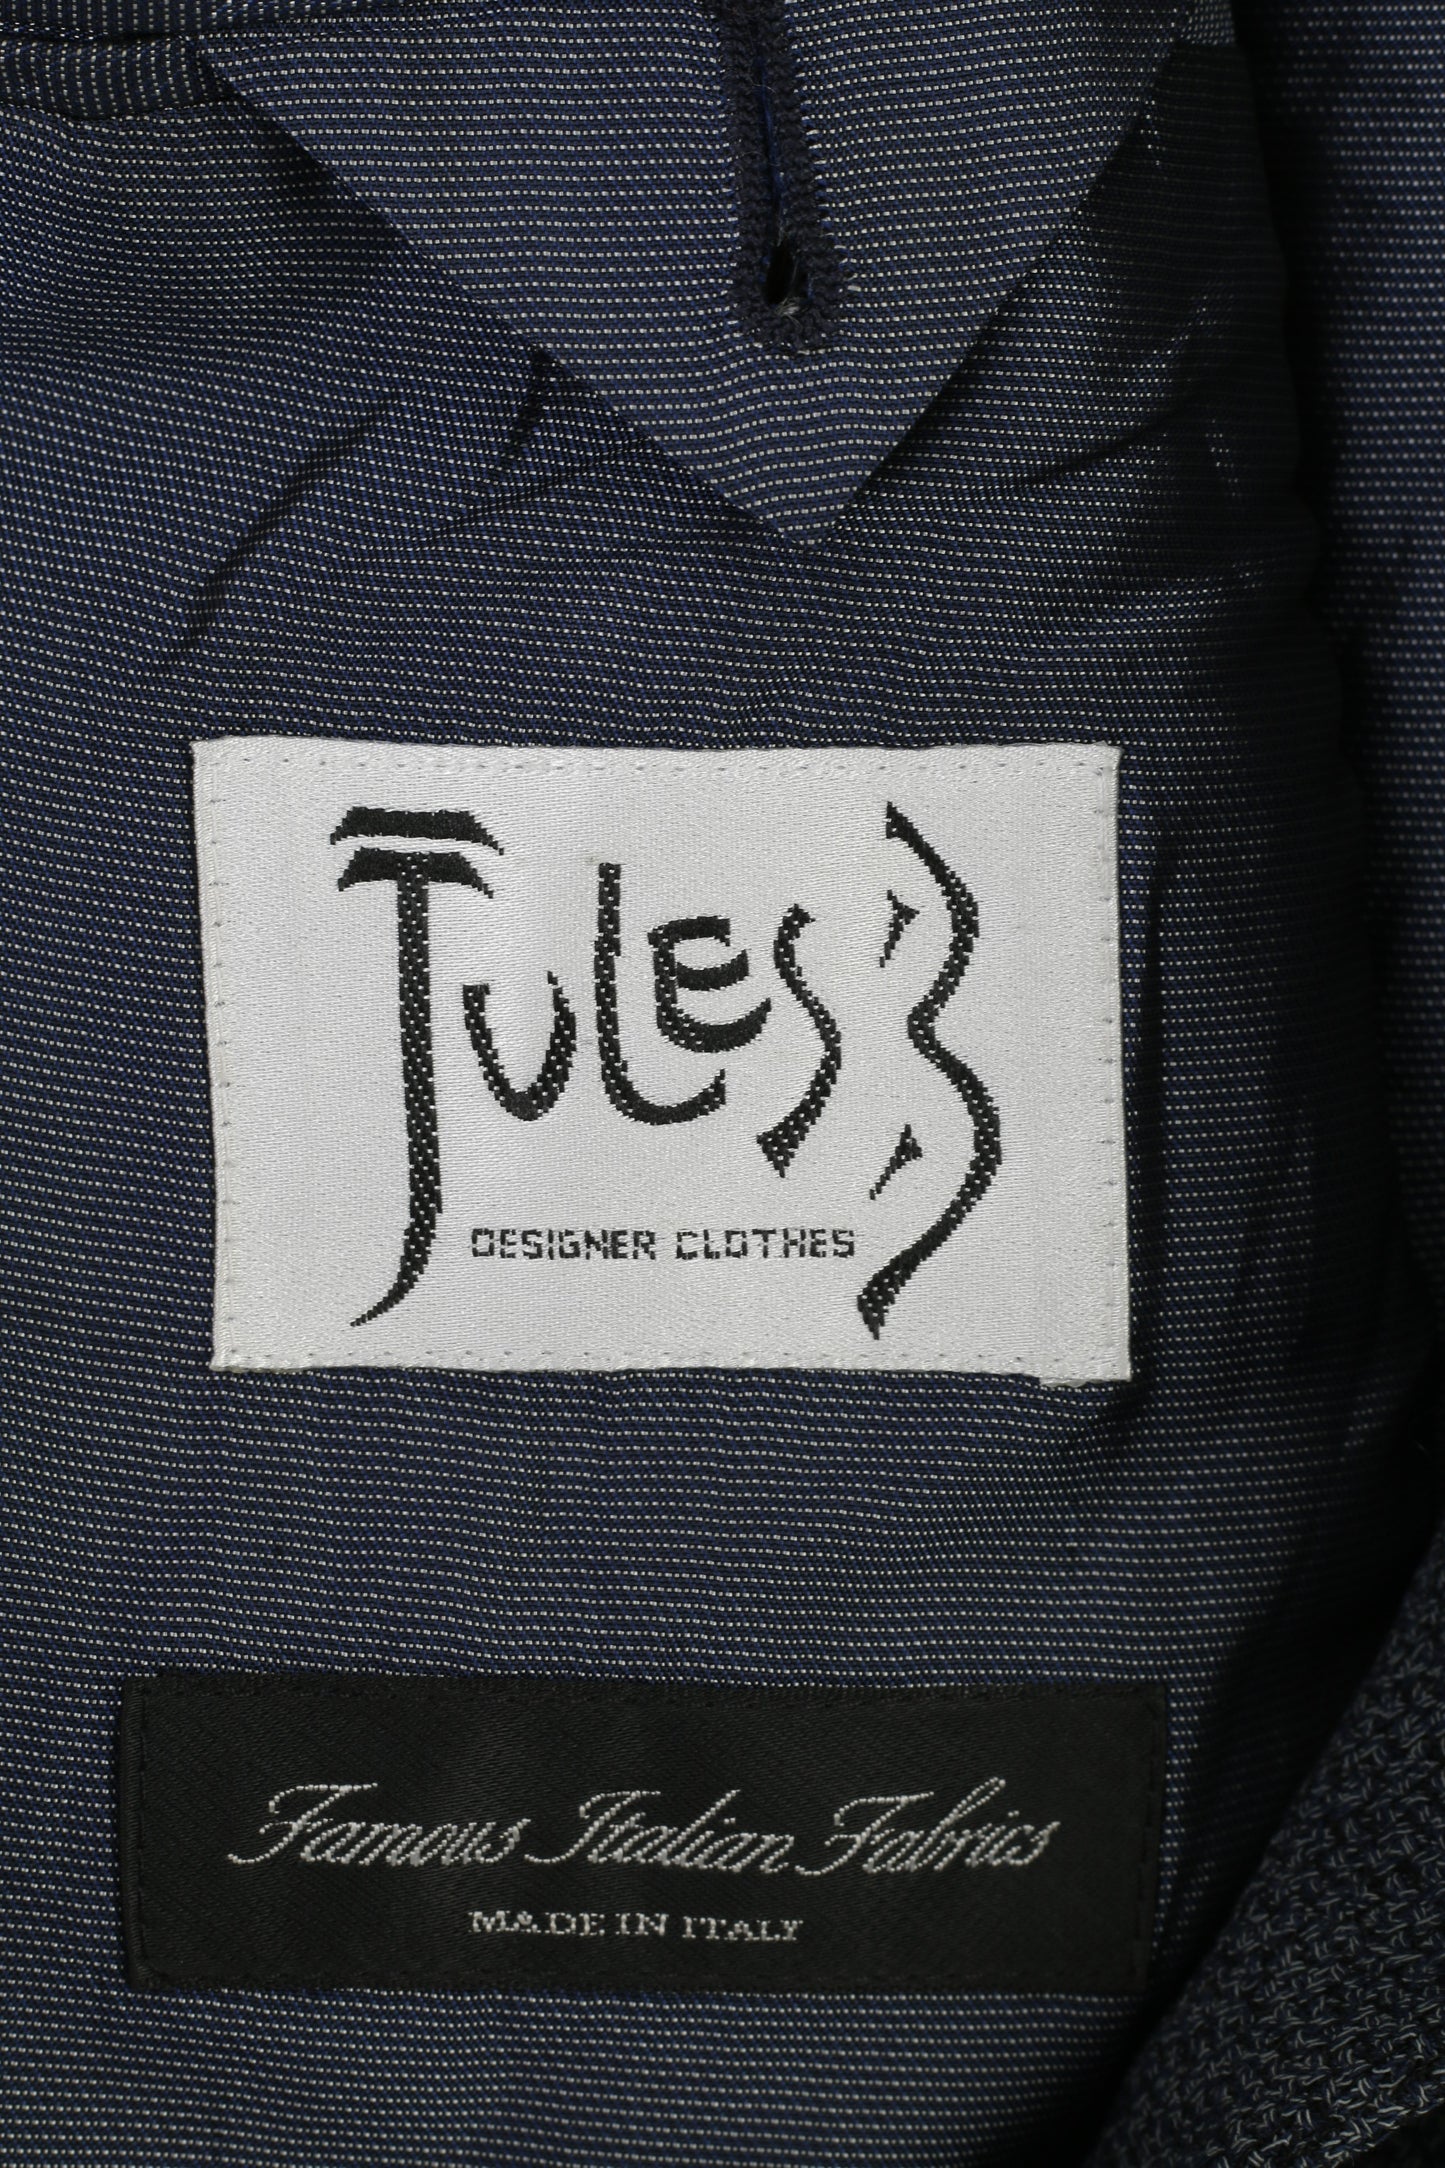 Tules Men 52 42  Blazer Vintage Italy Wool Navy Single Breasted Flamenco Jacket